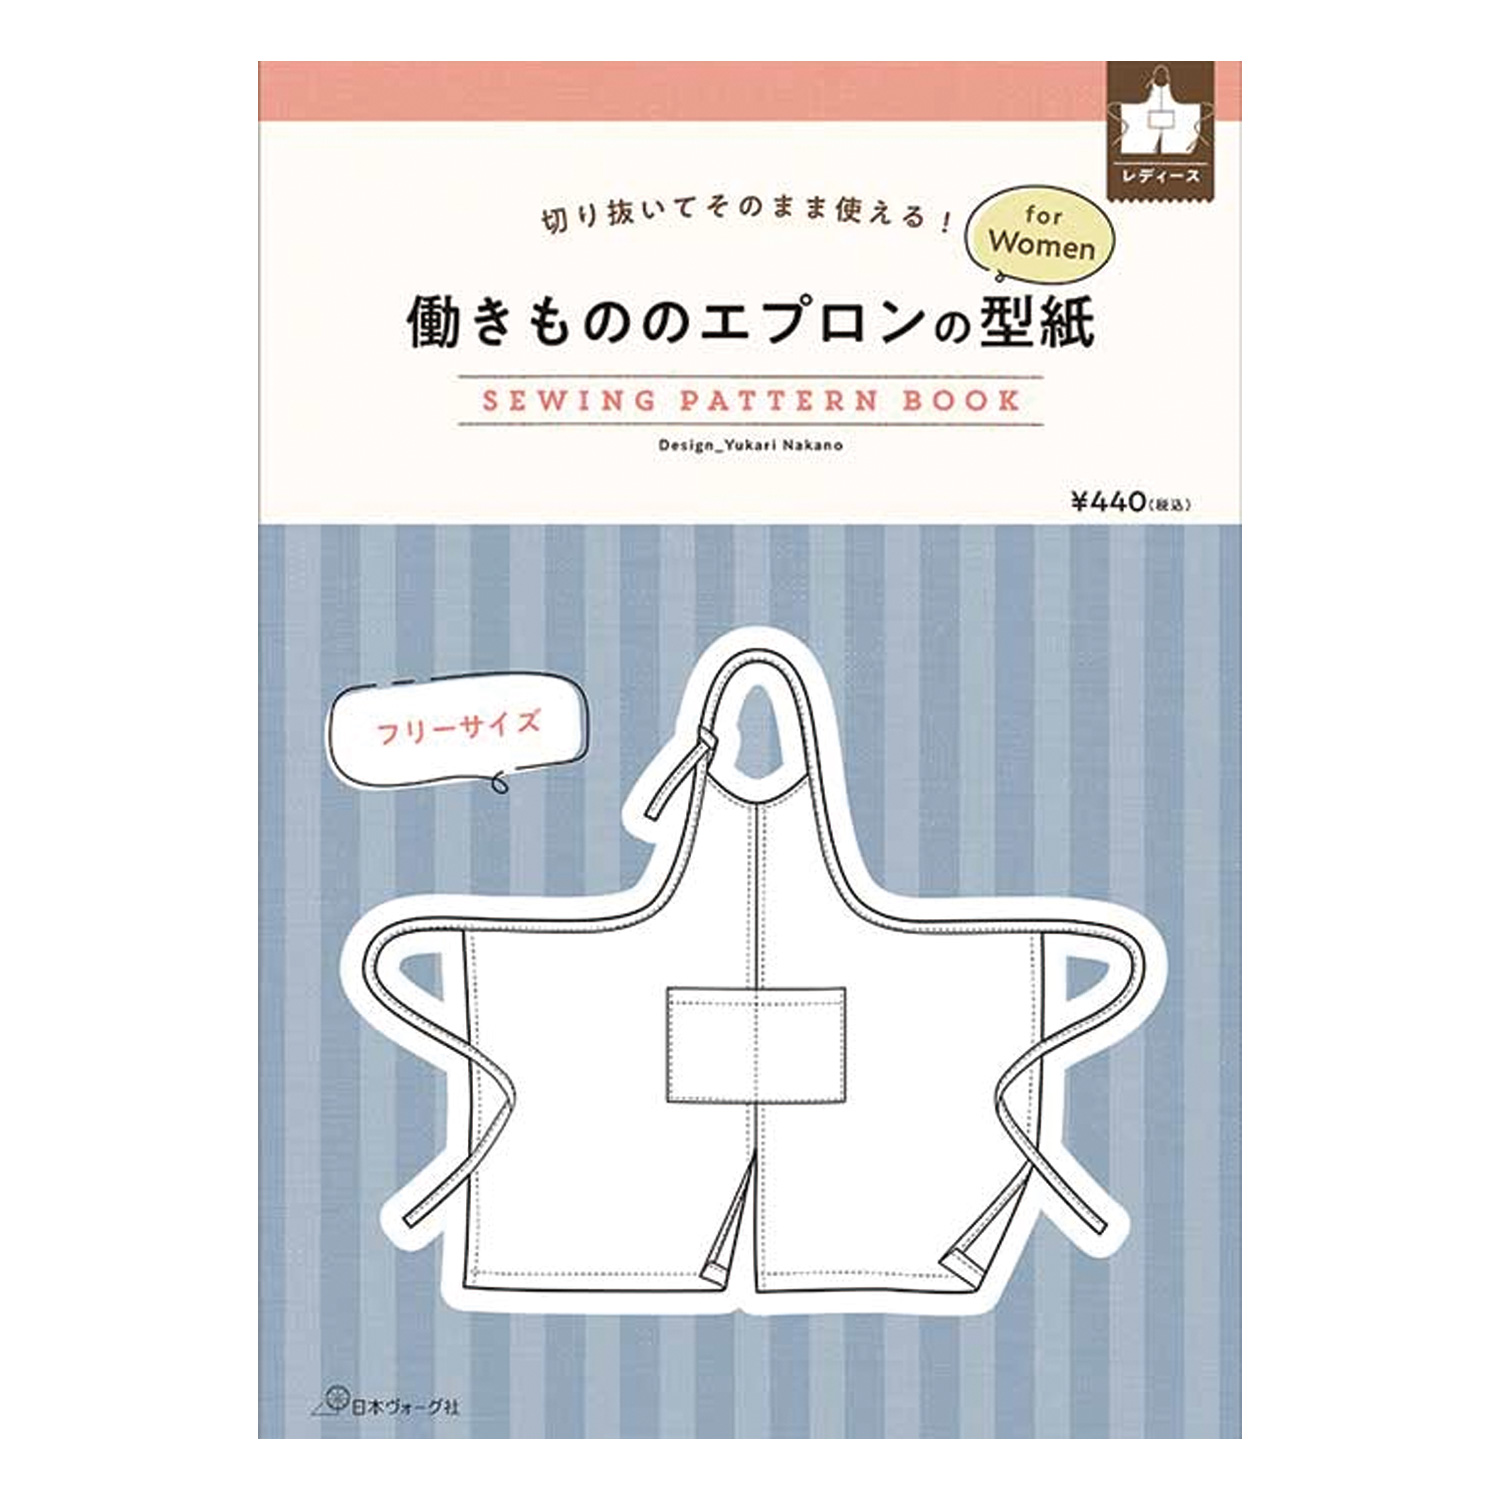 NV22070 Working apron pattern (book)